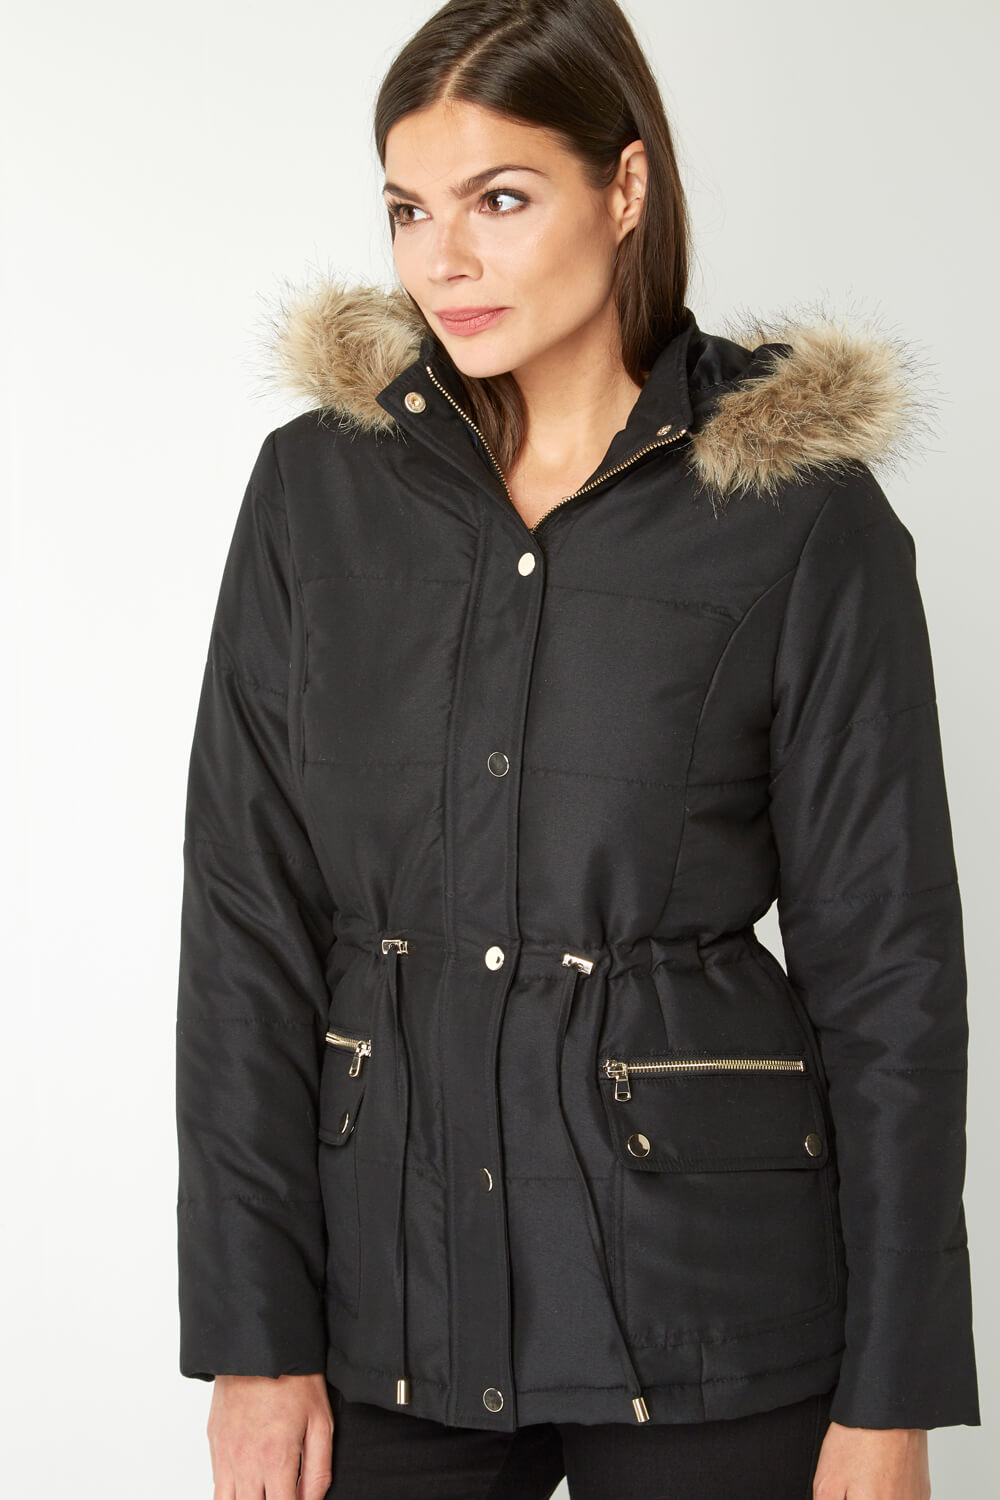 short black faux fur jacket uk